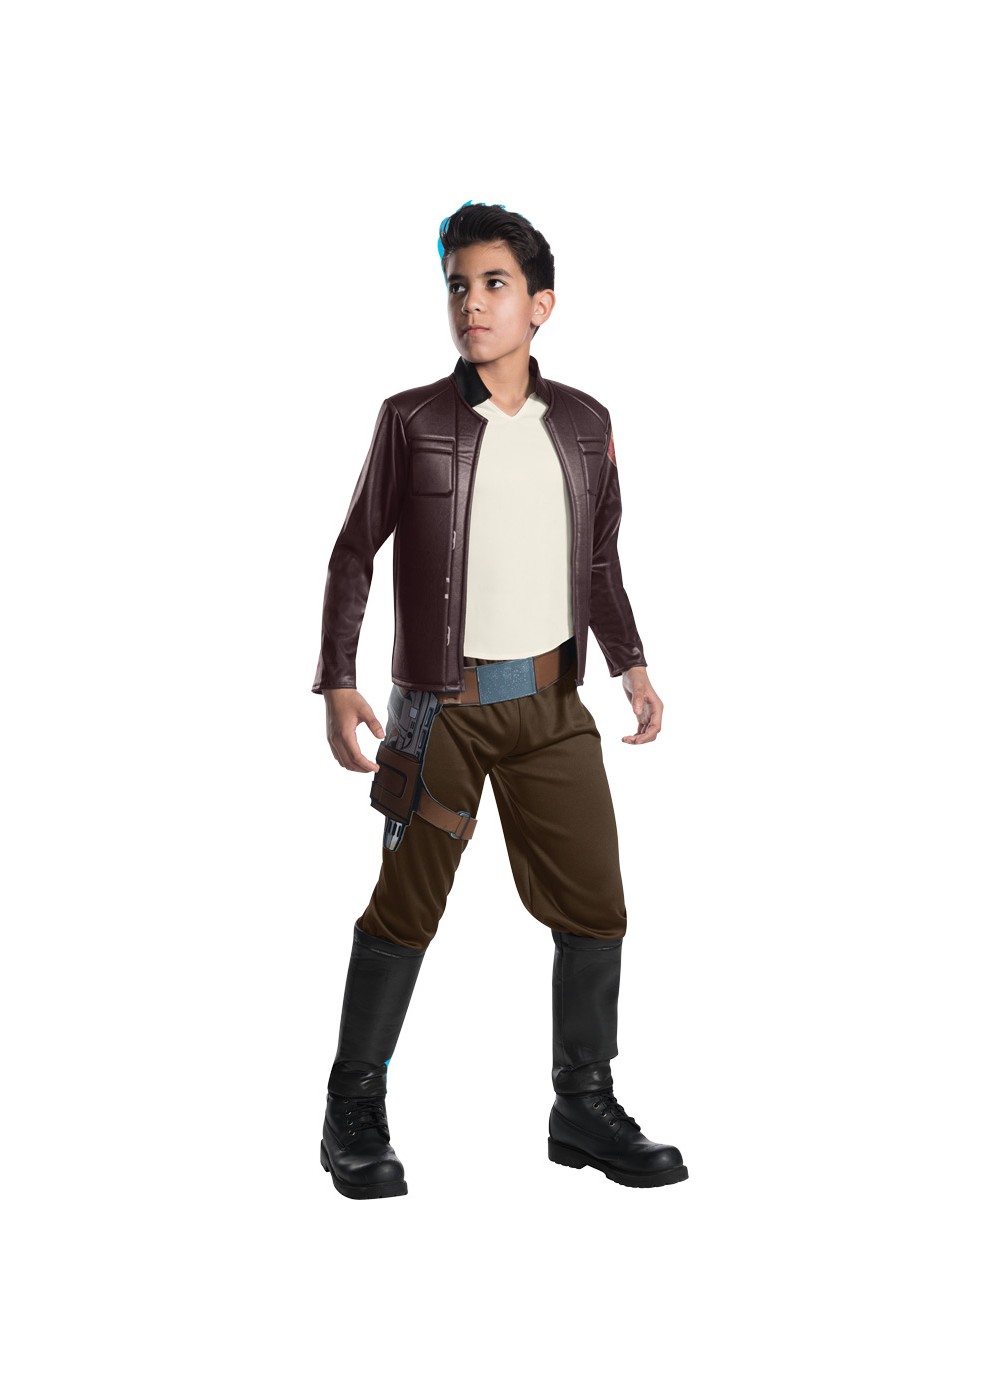 Poe Dameron Star Wars Boys Costume